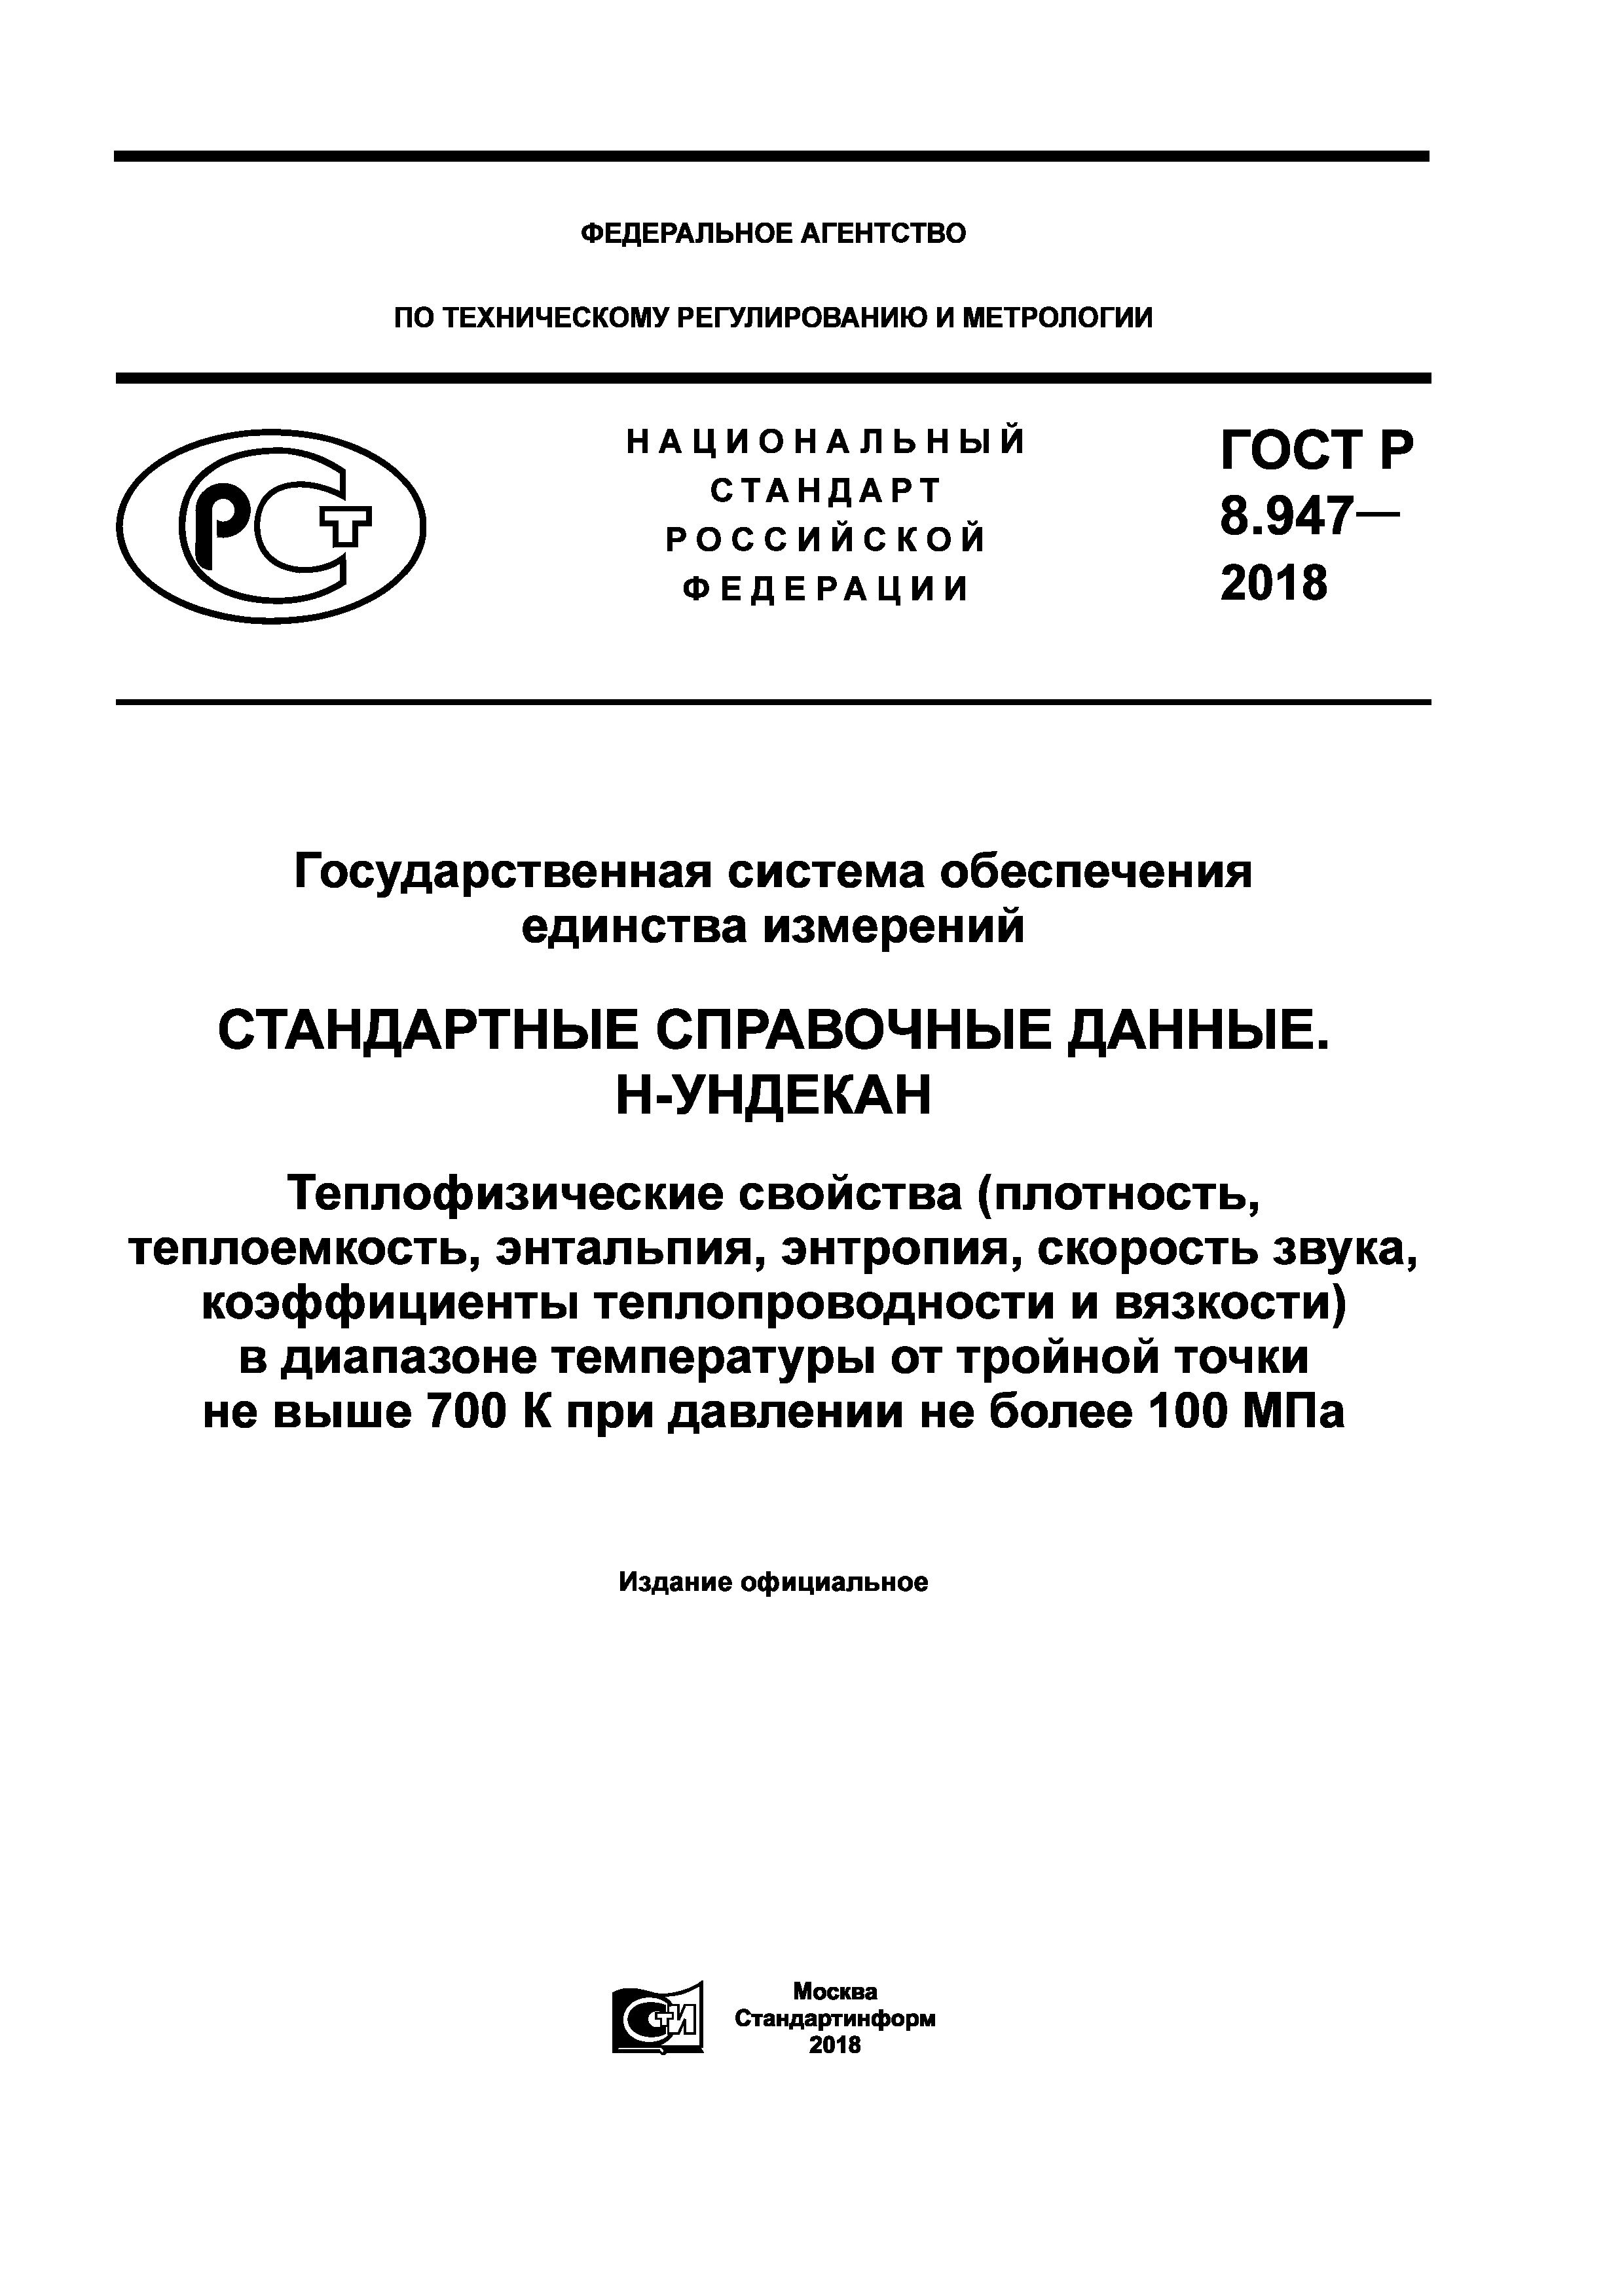 ГОСТ Р 8.947-2018